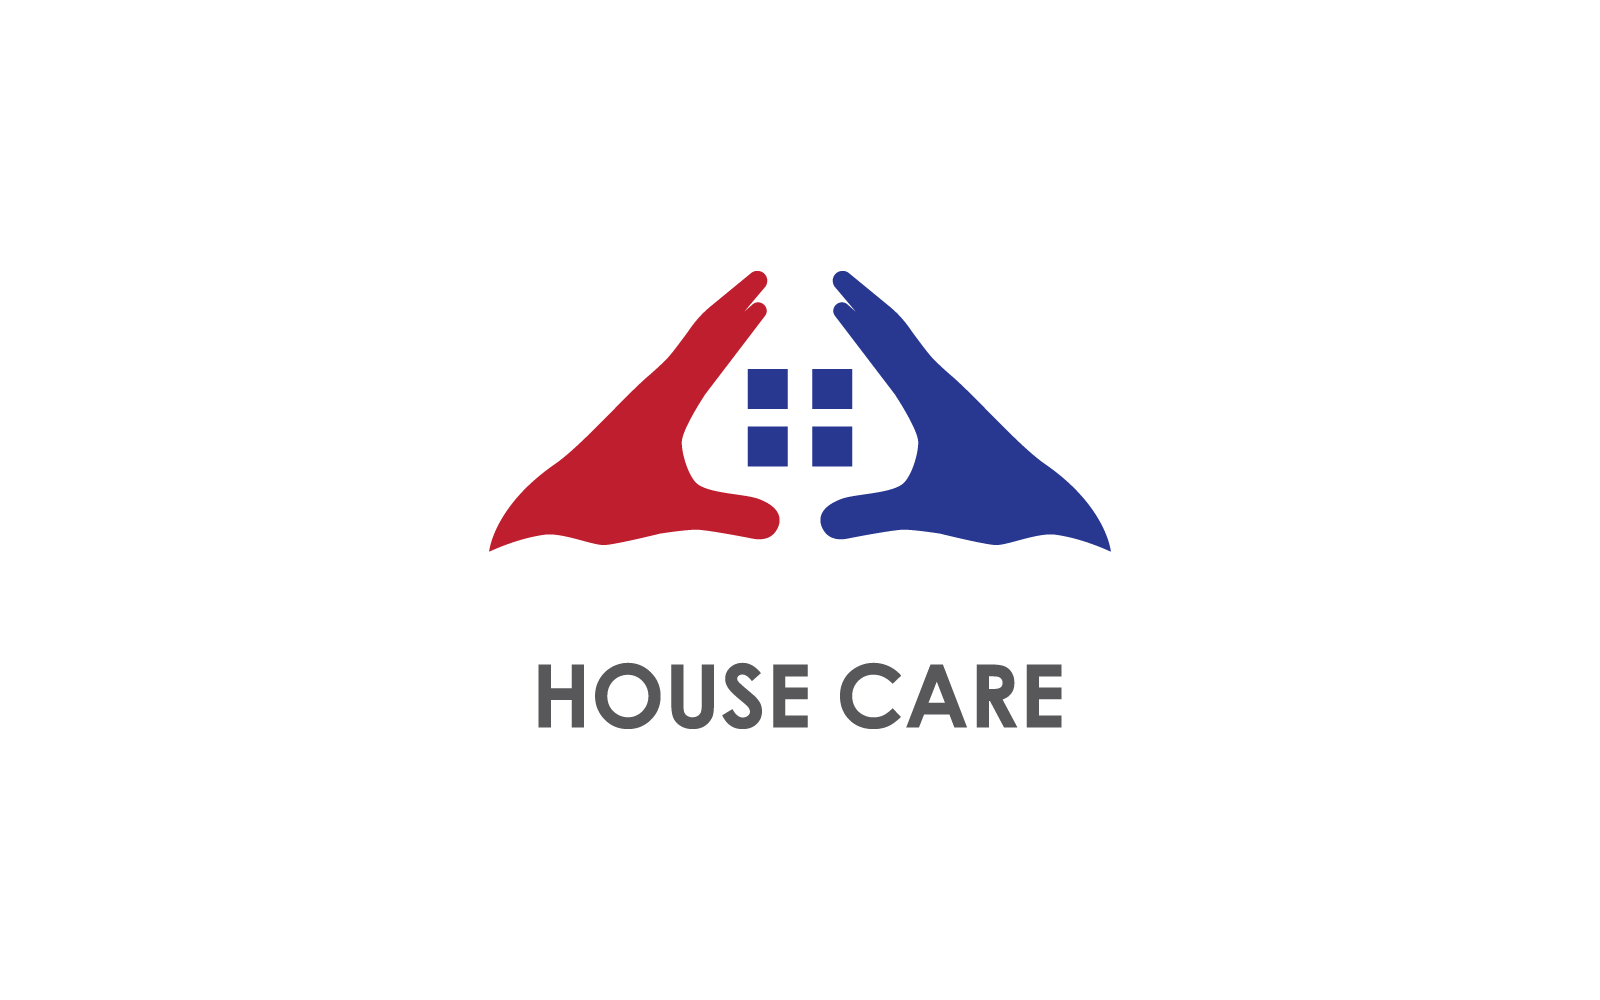 House care protection logo design vector template